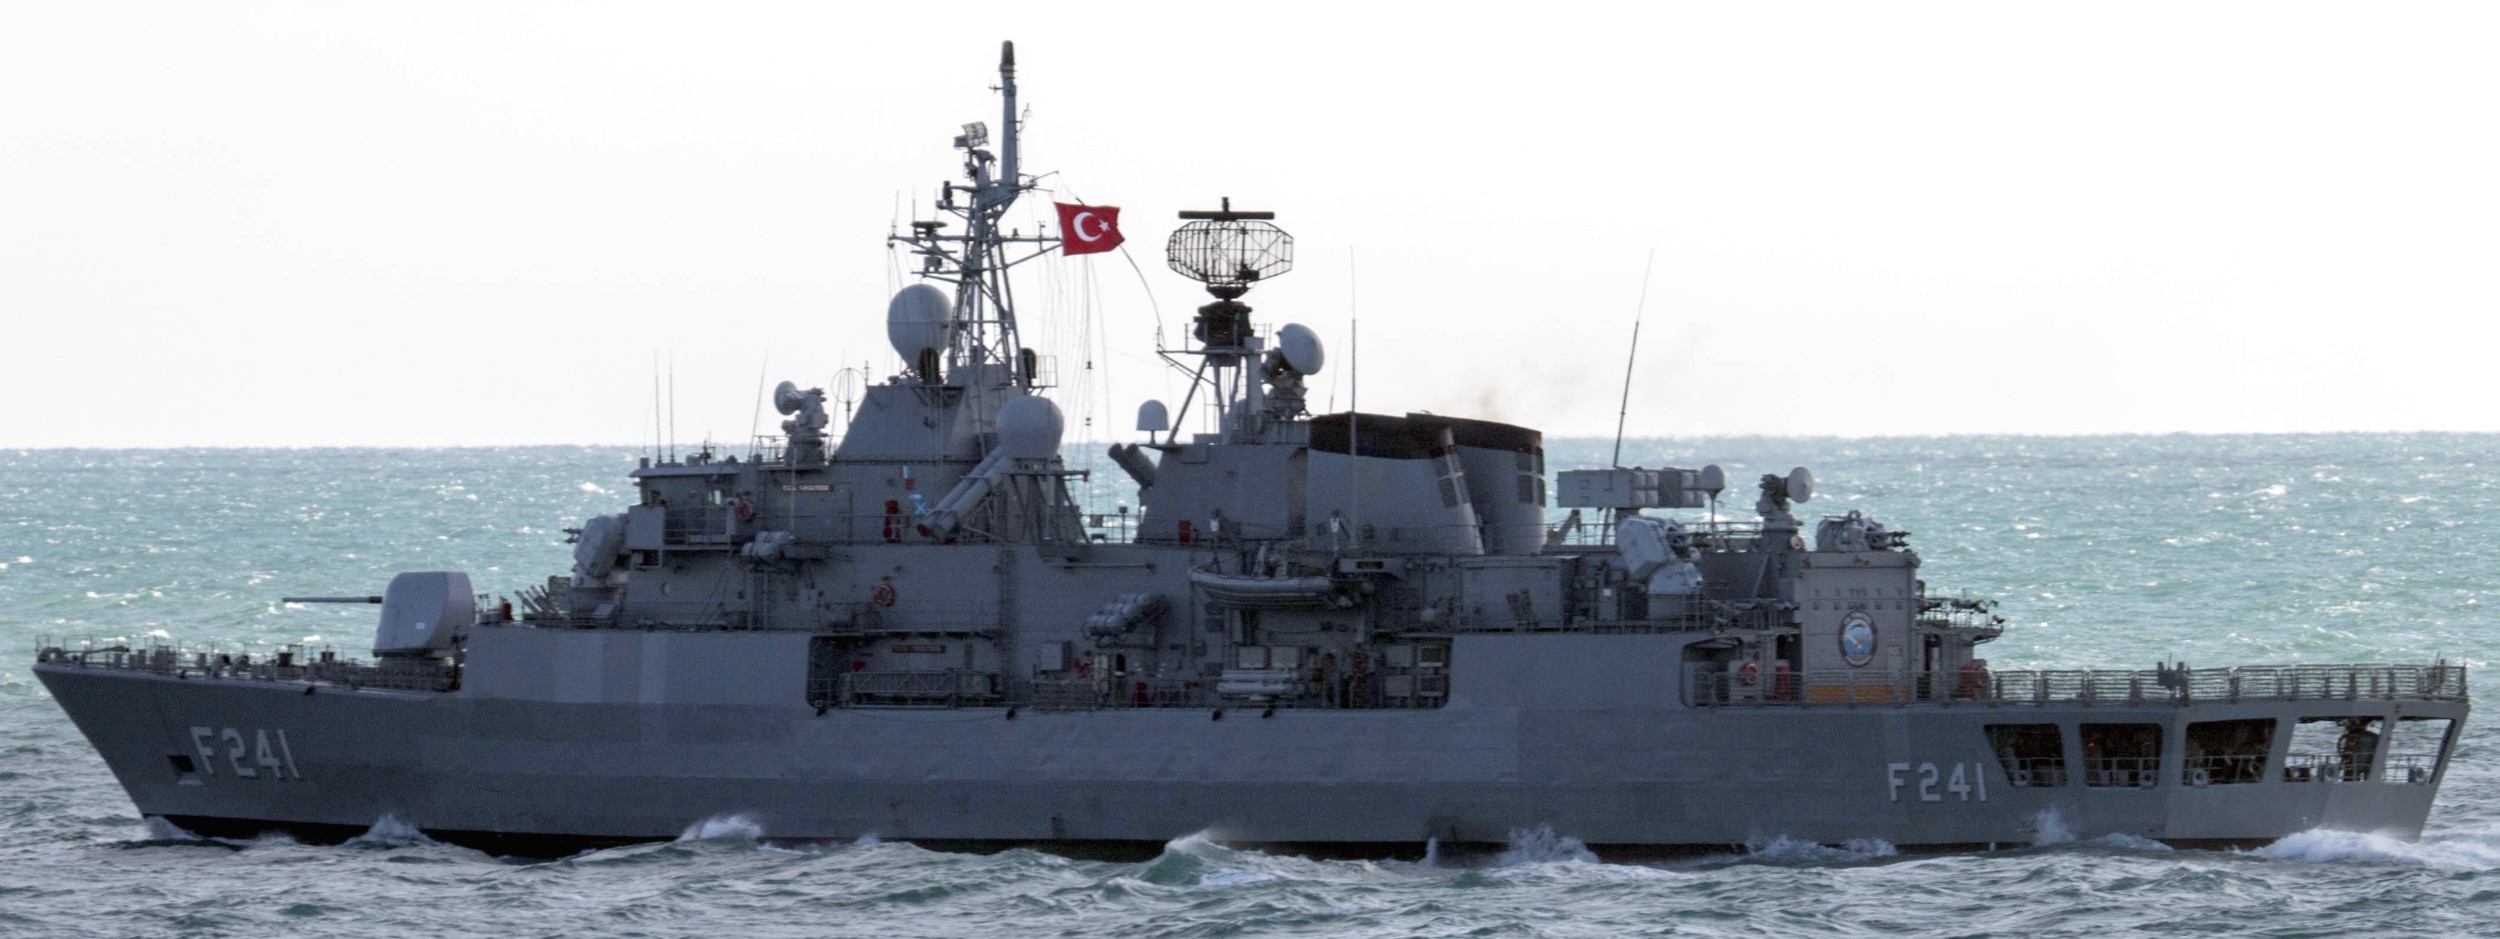 f-241 tcg turgutreis yavuz meko-200tn class frigate turkish navy türk deniz kuvvetleri 08 nato snmg